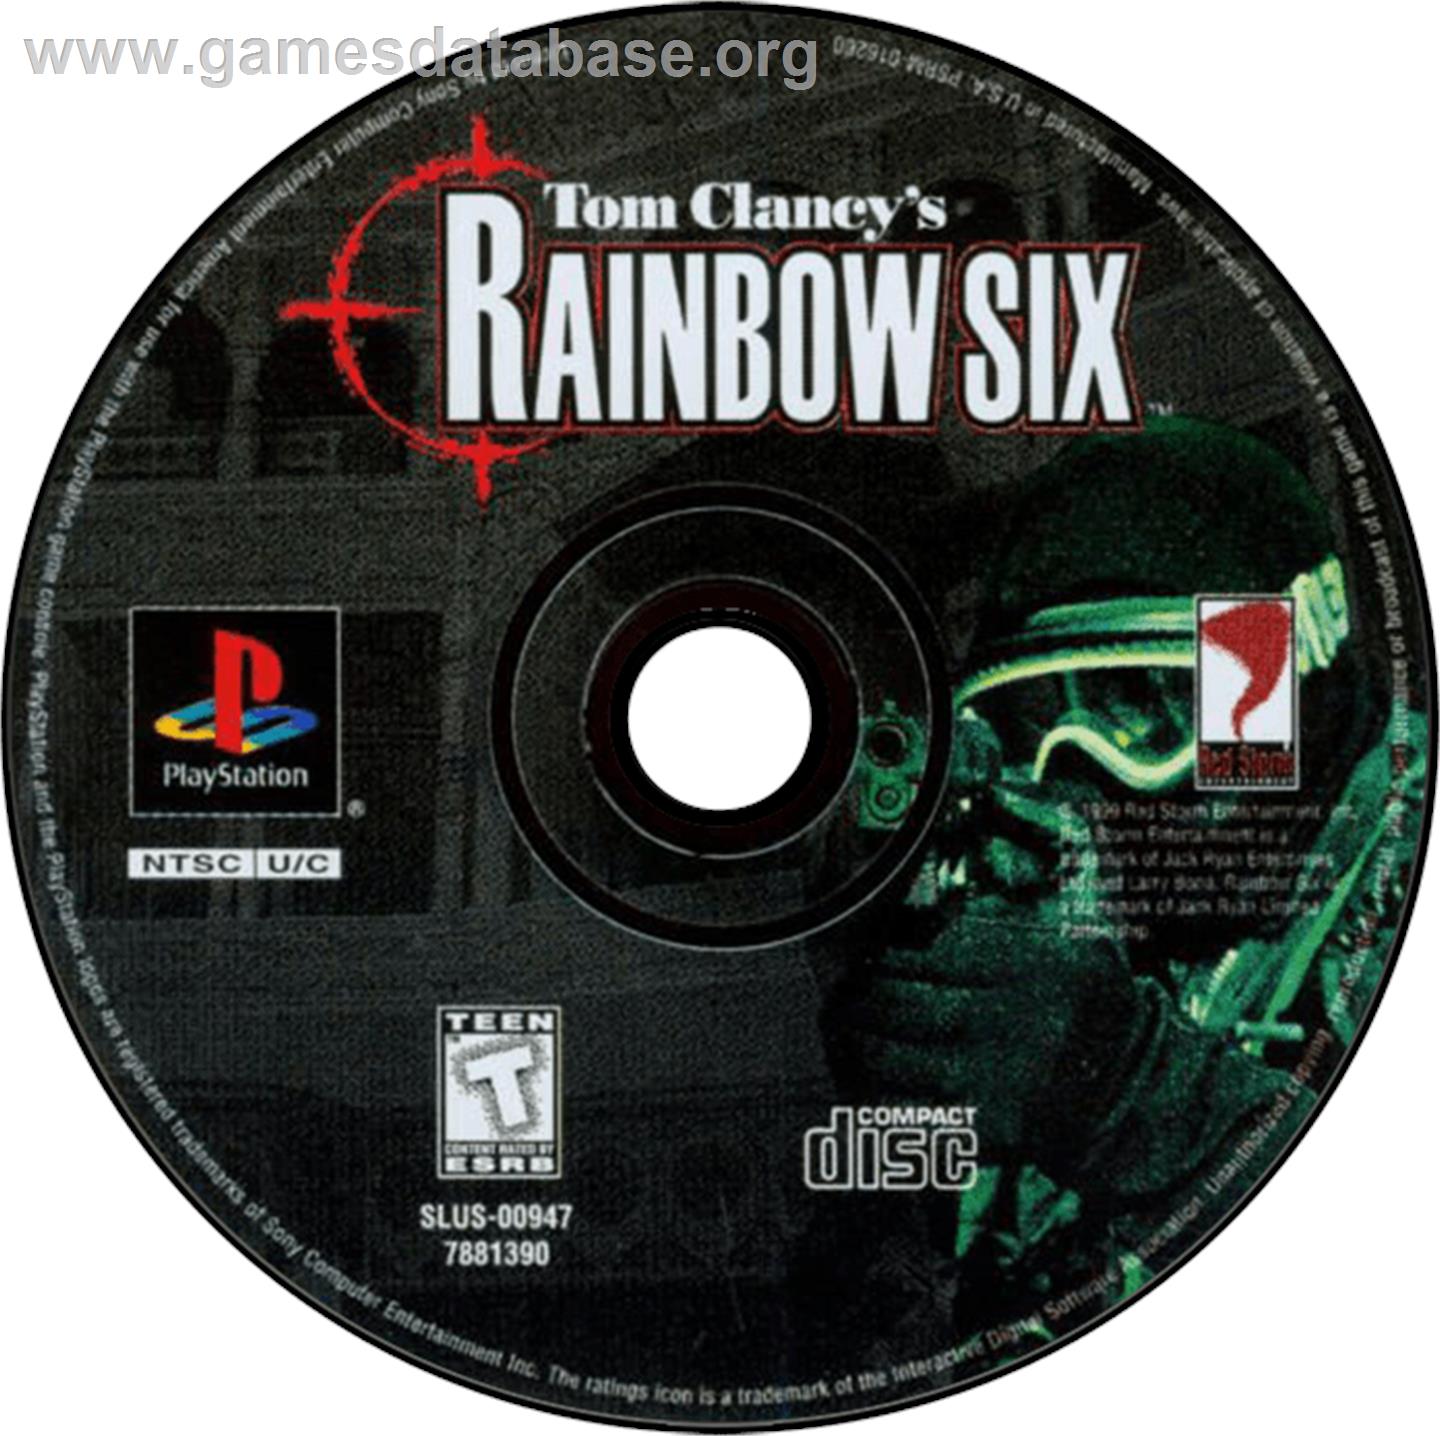 Tom Clancy's Rainbow Six / Tom Clancy's Rainbow Six: Rogue Spear - Sony Playstation - Artwork - Disc